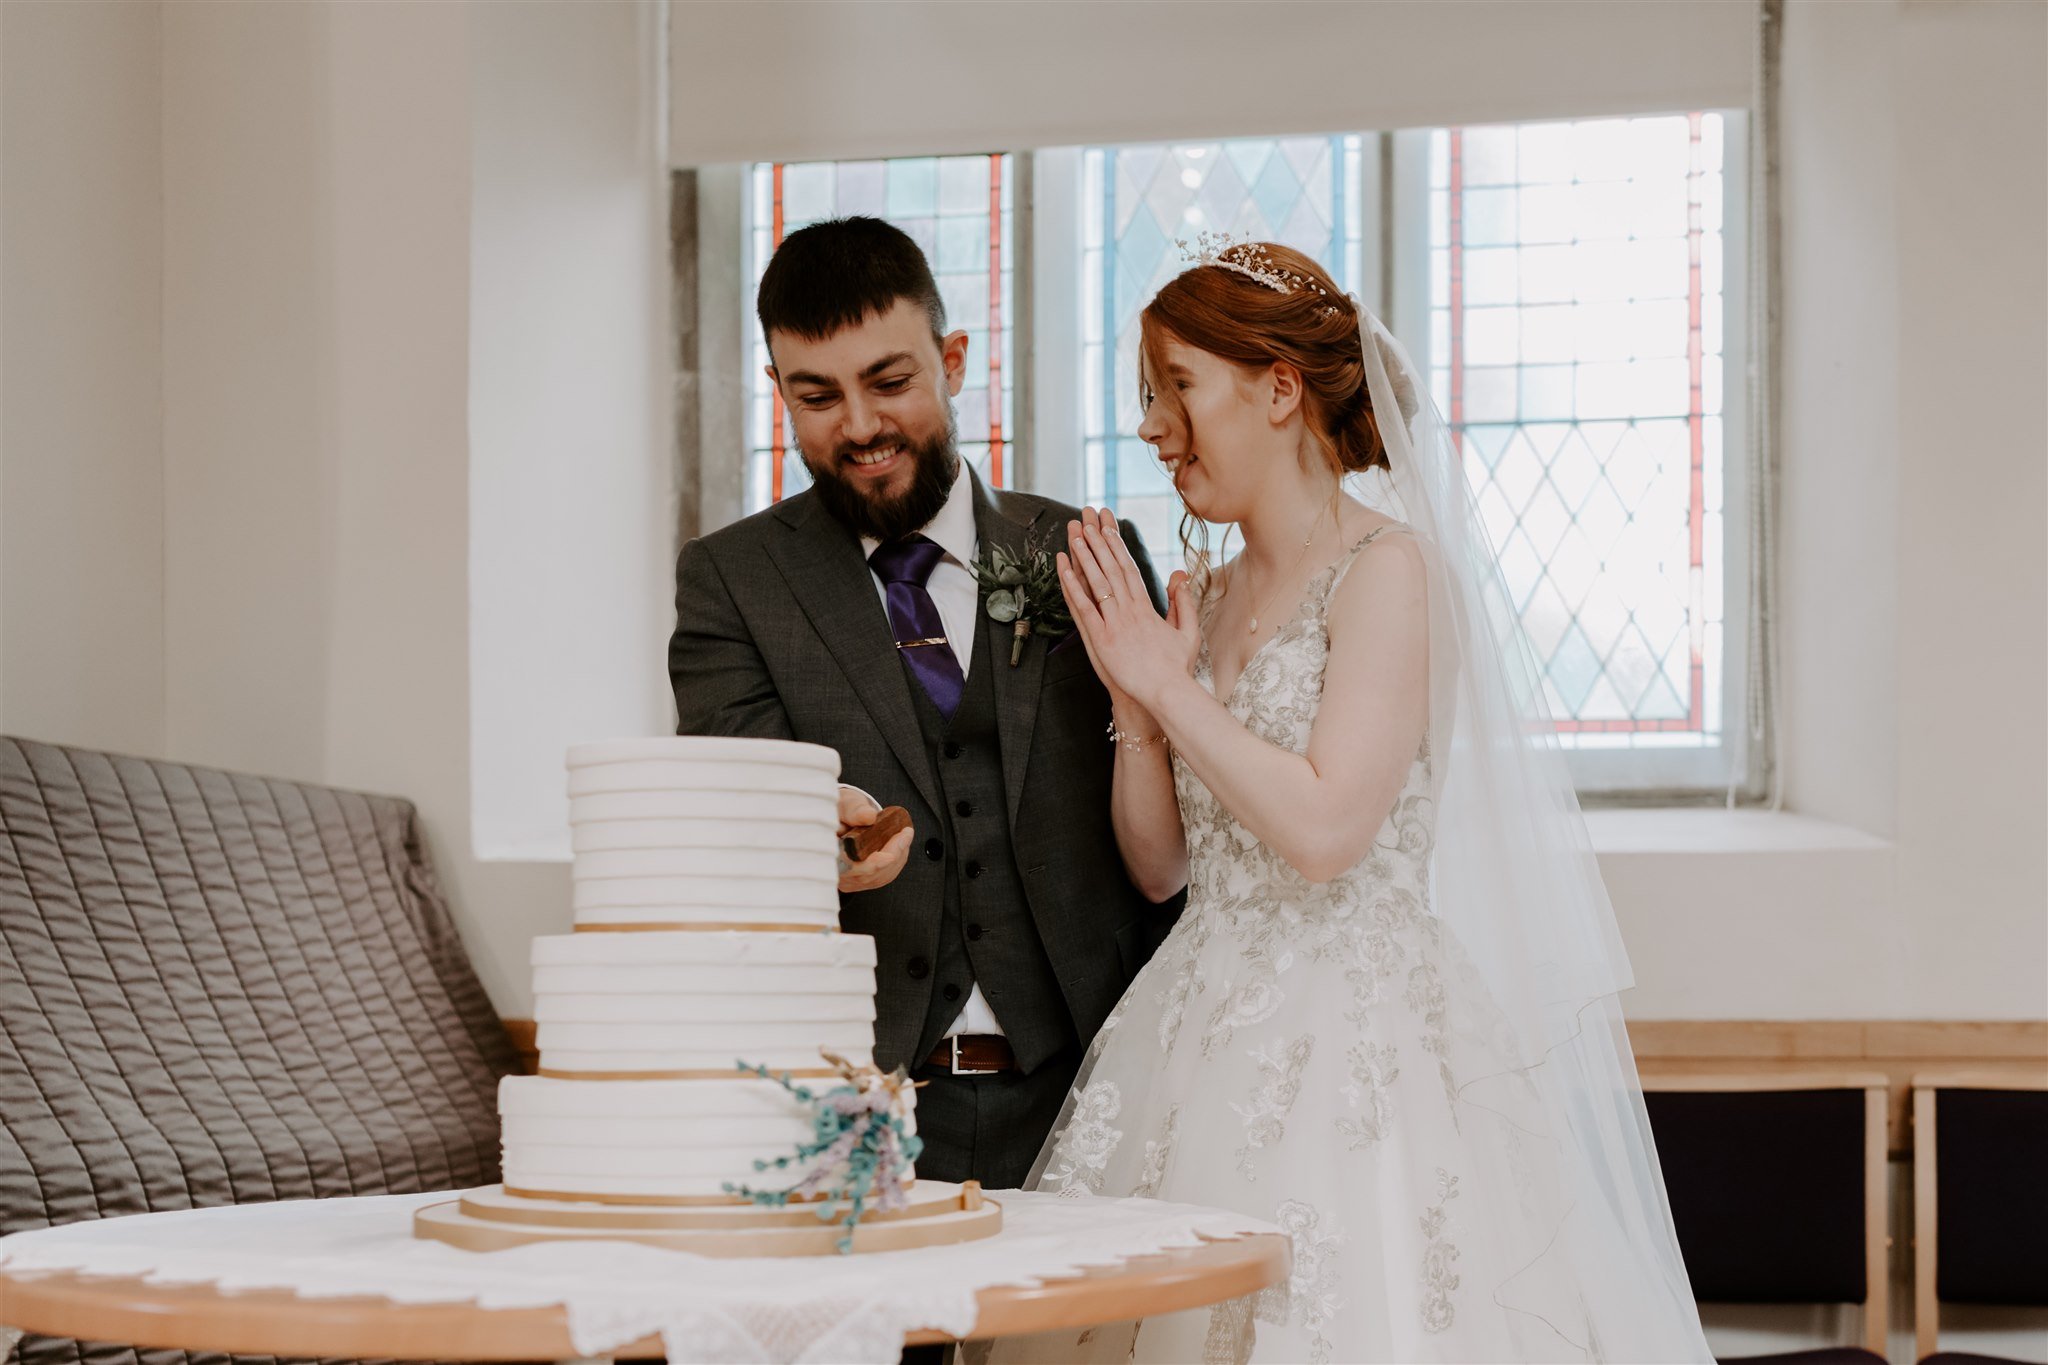 wedding cake cut after wedding ceremony Stamford methodist church wedding photographer